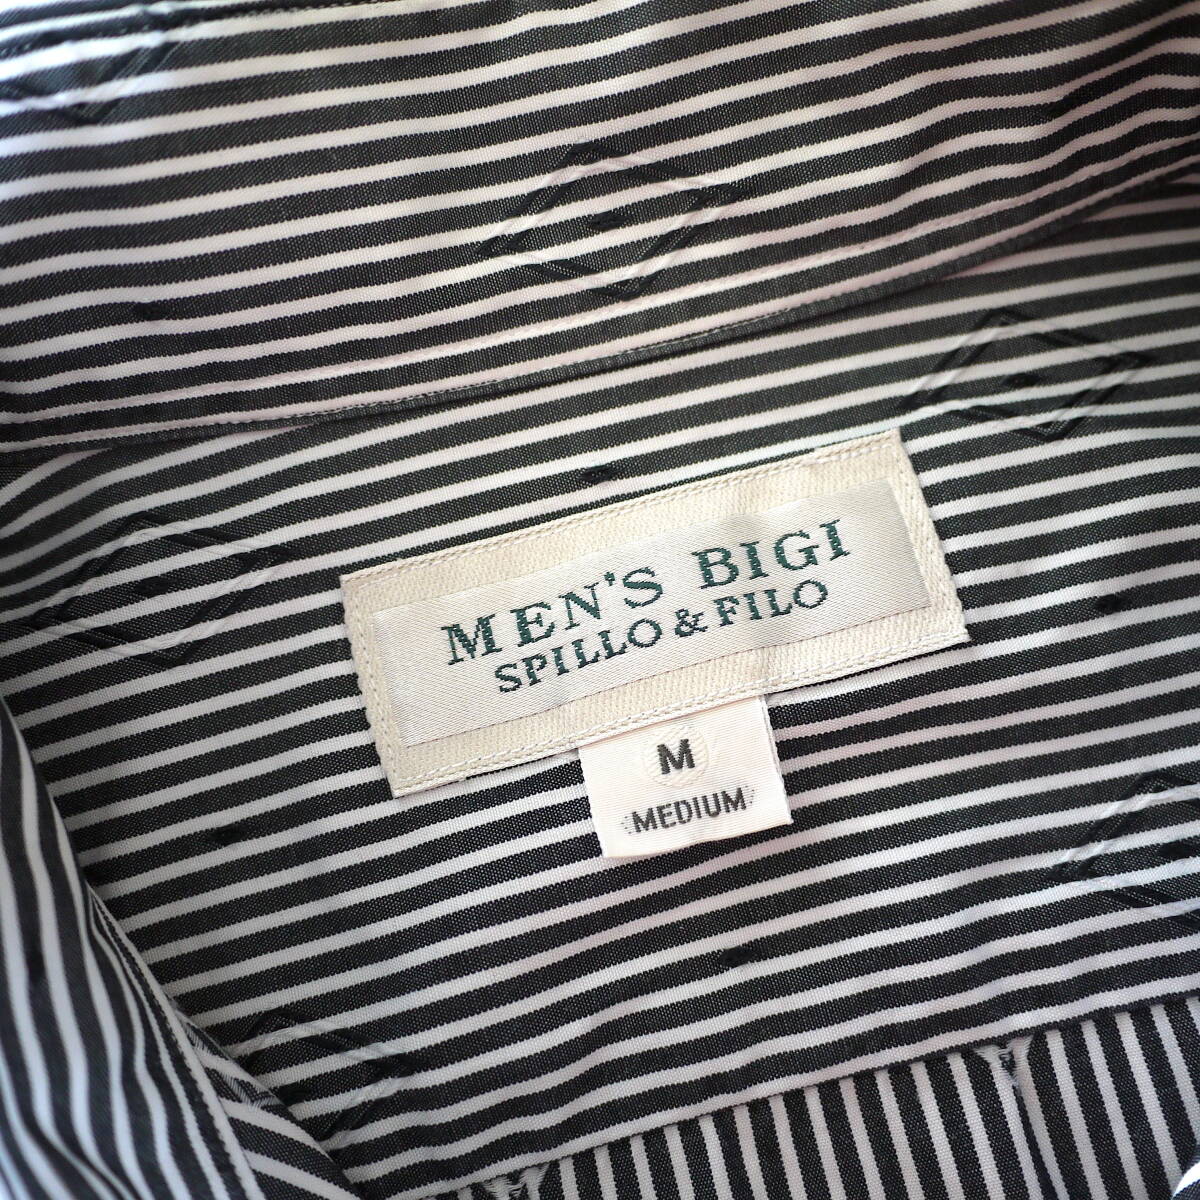 MEN'S BIGI メンズビギ ストライプシャツ 模様入り〈 Mサイズ 〉日本製 ホワイト／グレー 美品の画像5